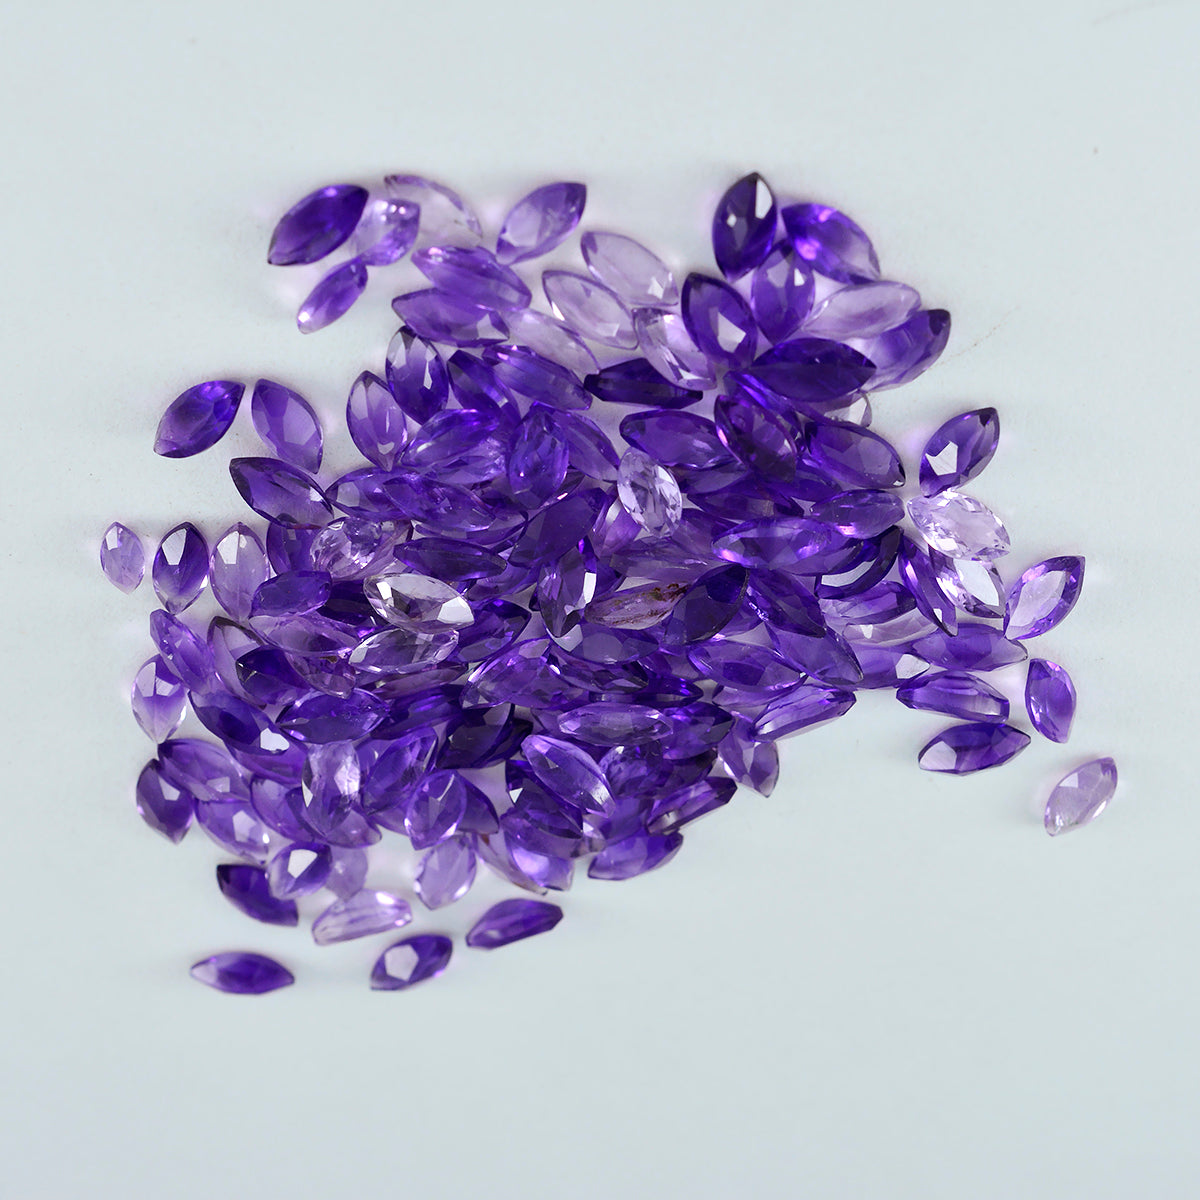 Riyogems 1PC Real Purple Amethyst Faceted 3x6 mm Marquise Shape wonderful Quality Loose Gems